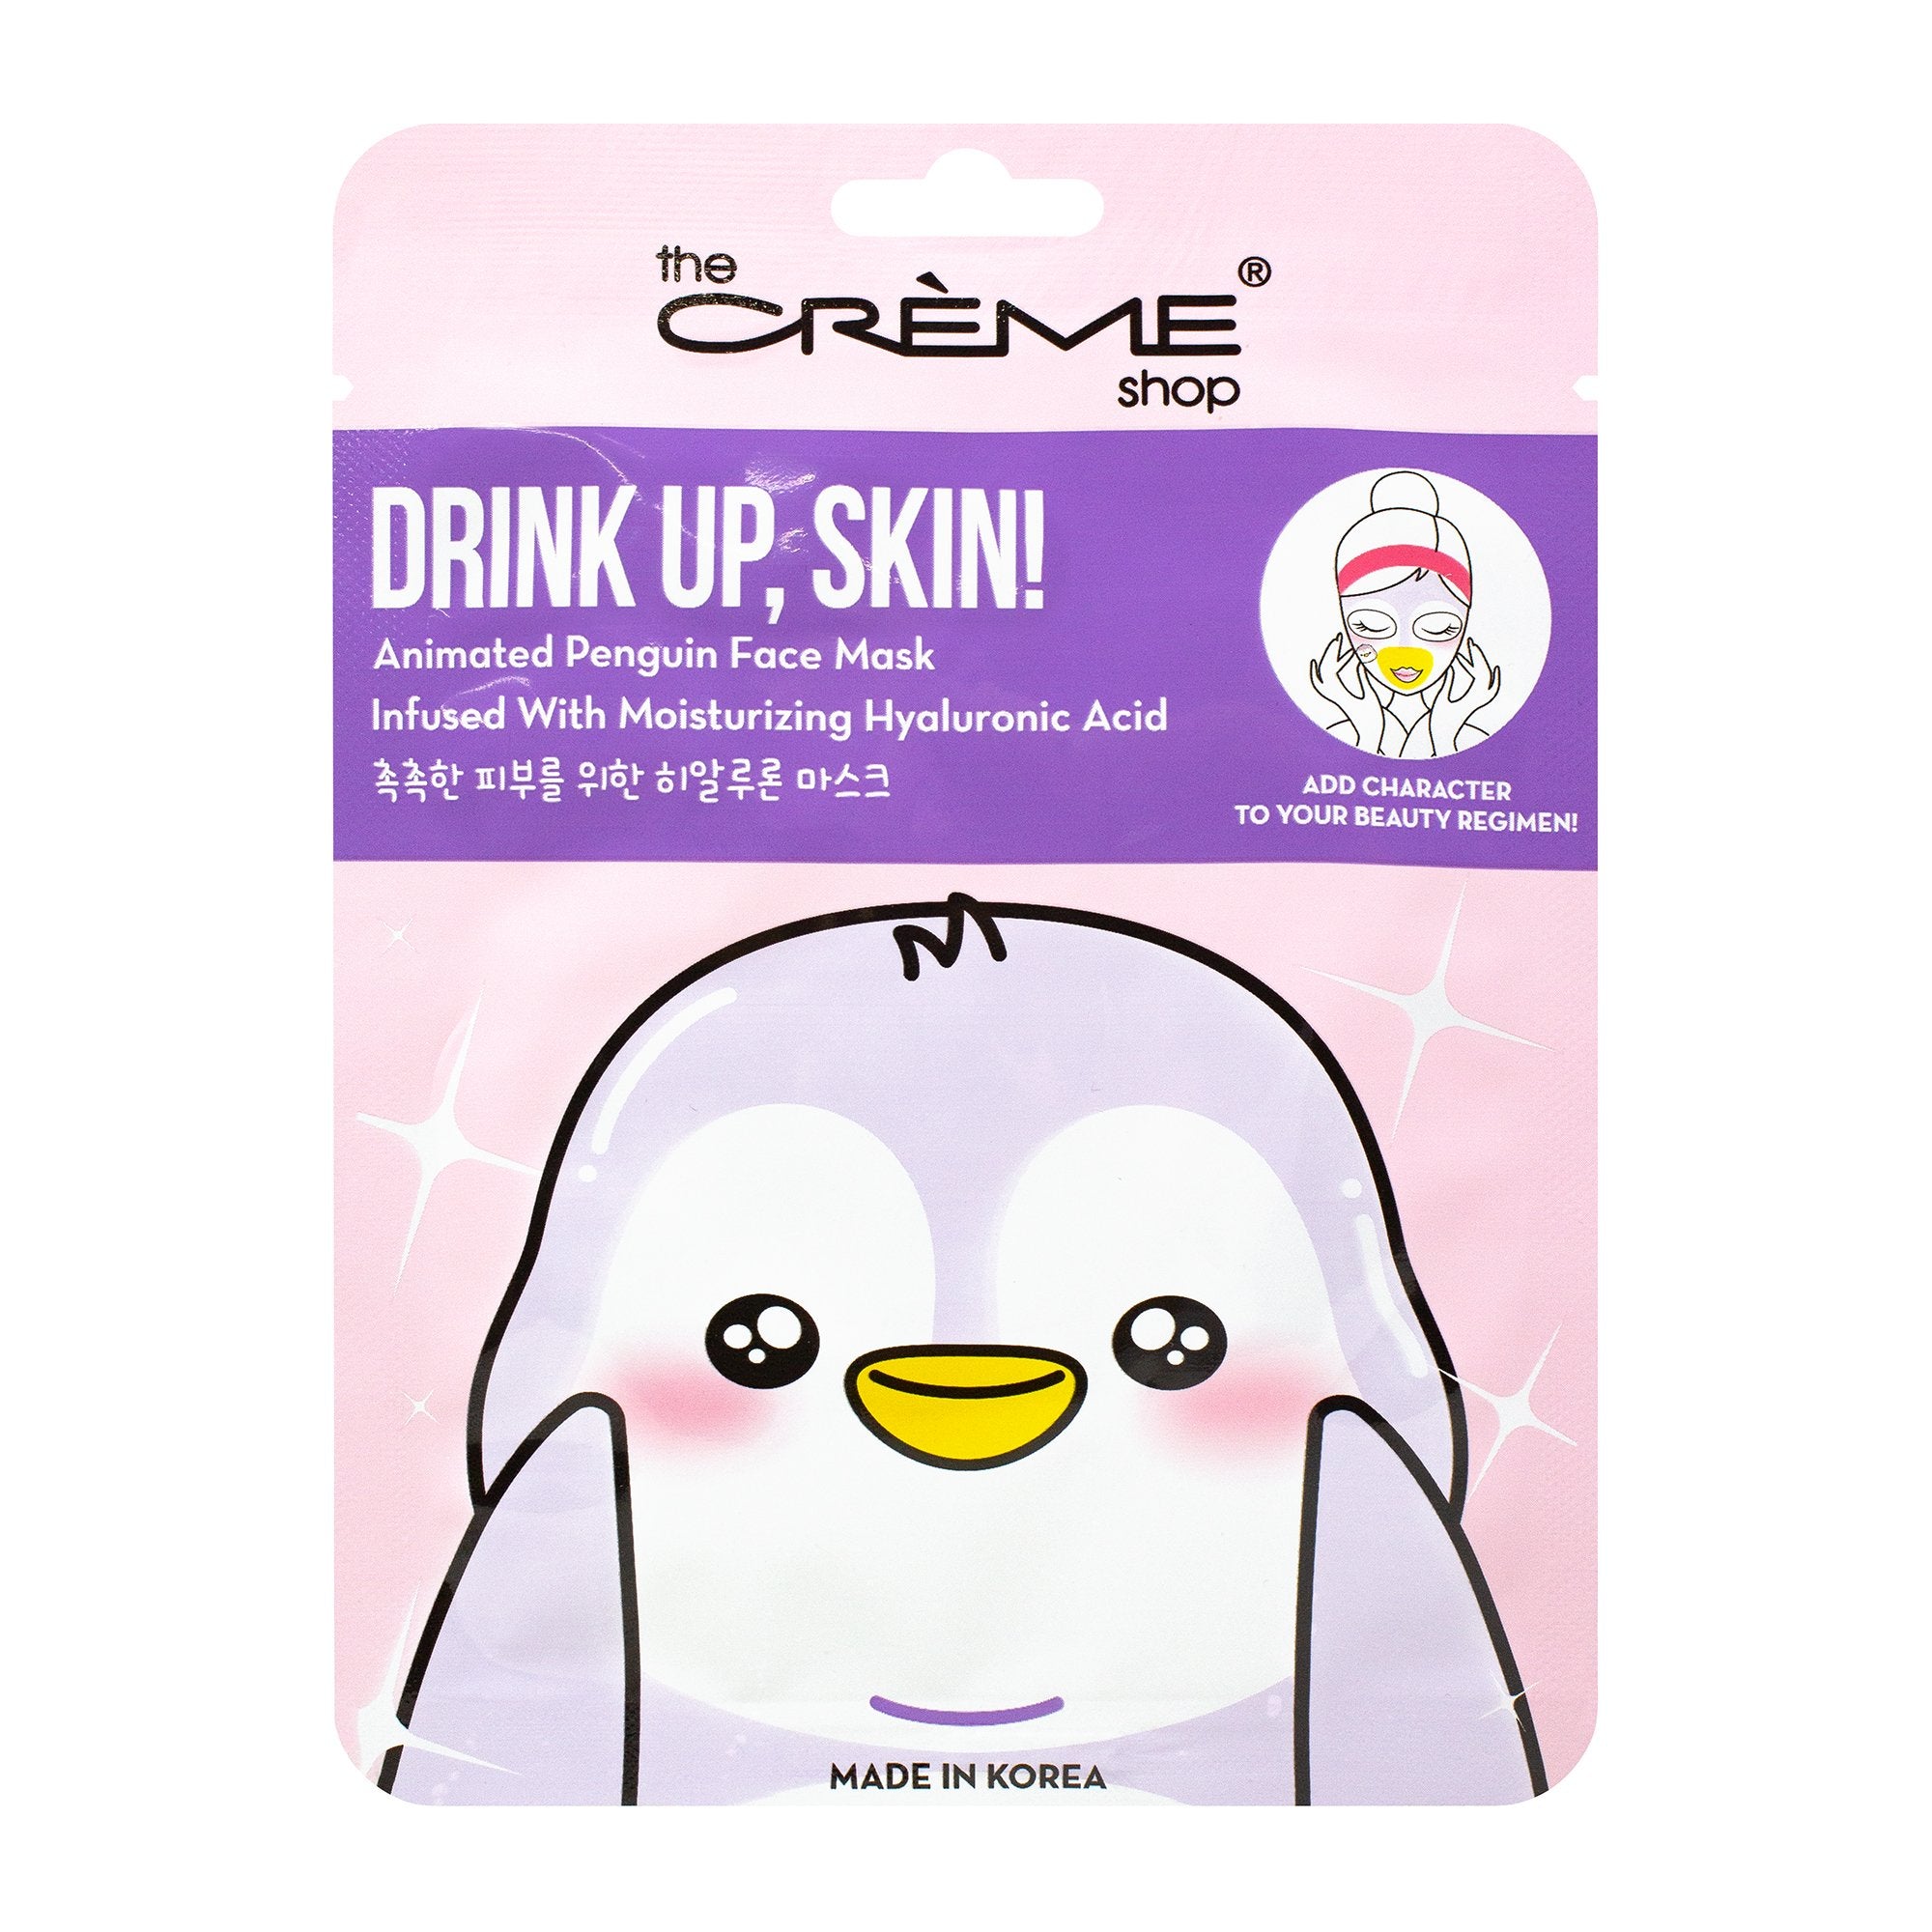 Drink Up, Skin! Animated Penguin Face Mask - Infused with Moisturizing Hyaluronic Acid Animated Sheet Mask Single - The Crème Shop 